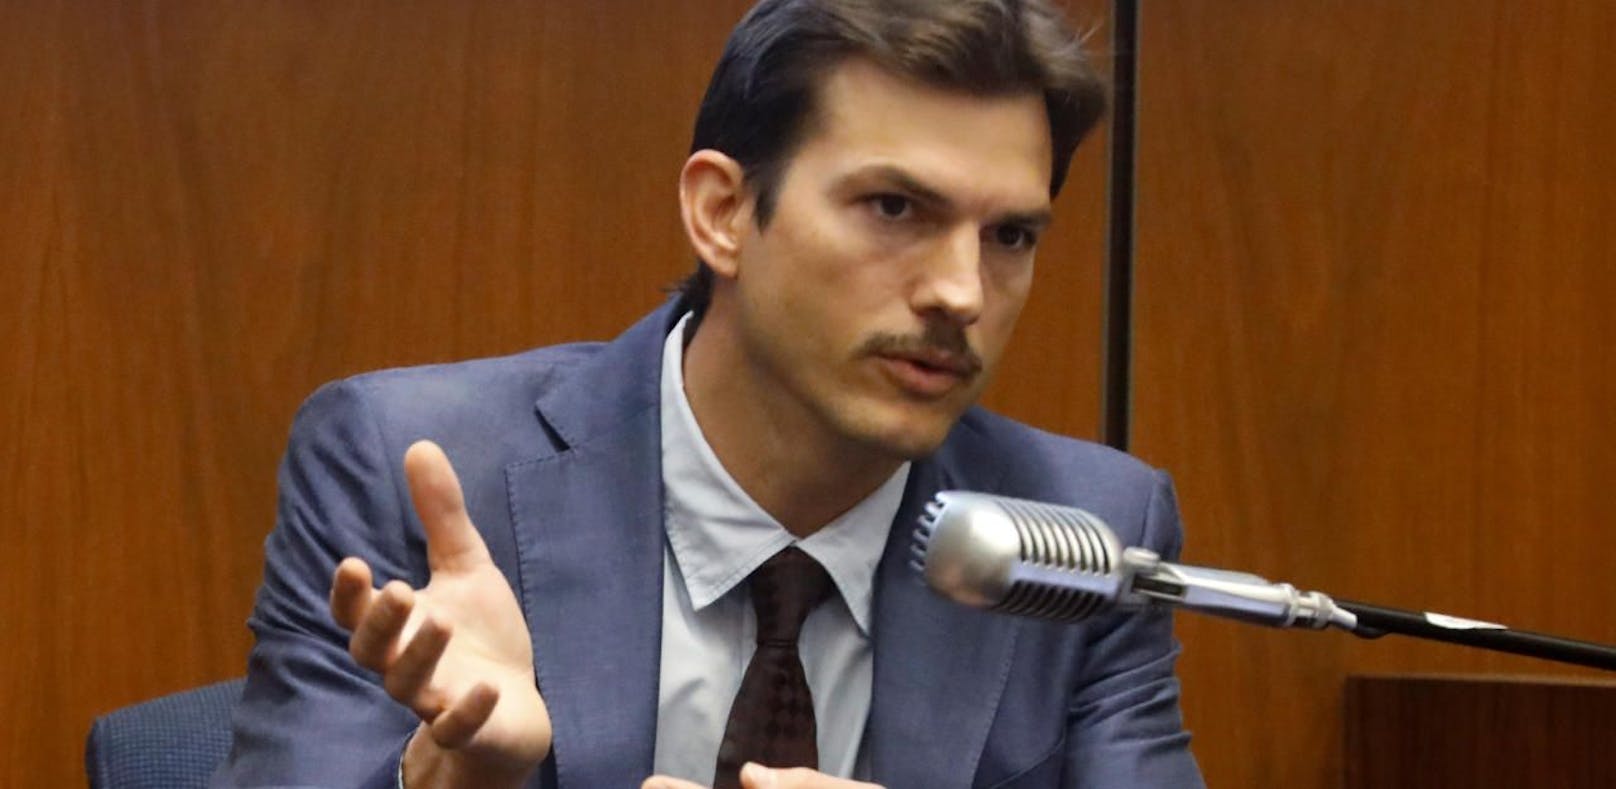 Ashton Kutcher als Zeuge gegen "Hollywood Ripper"